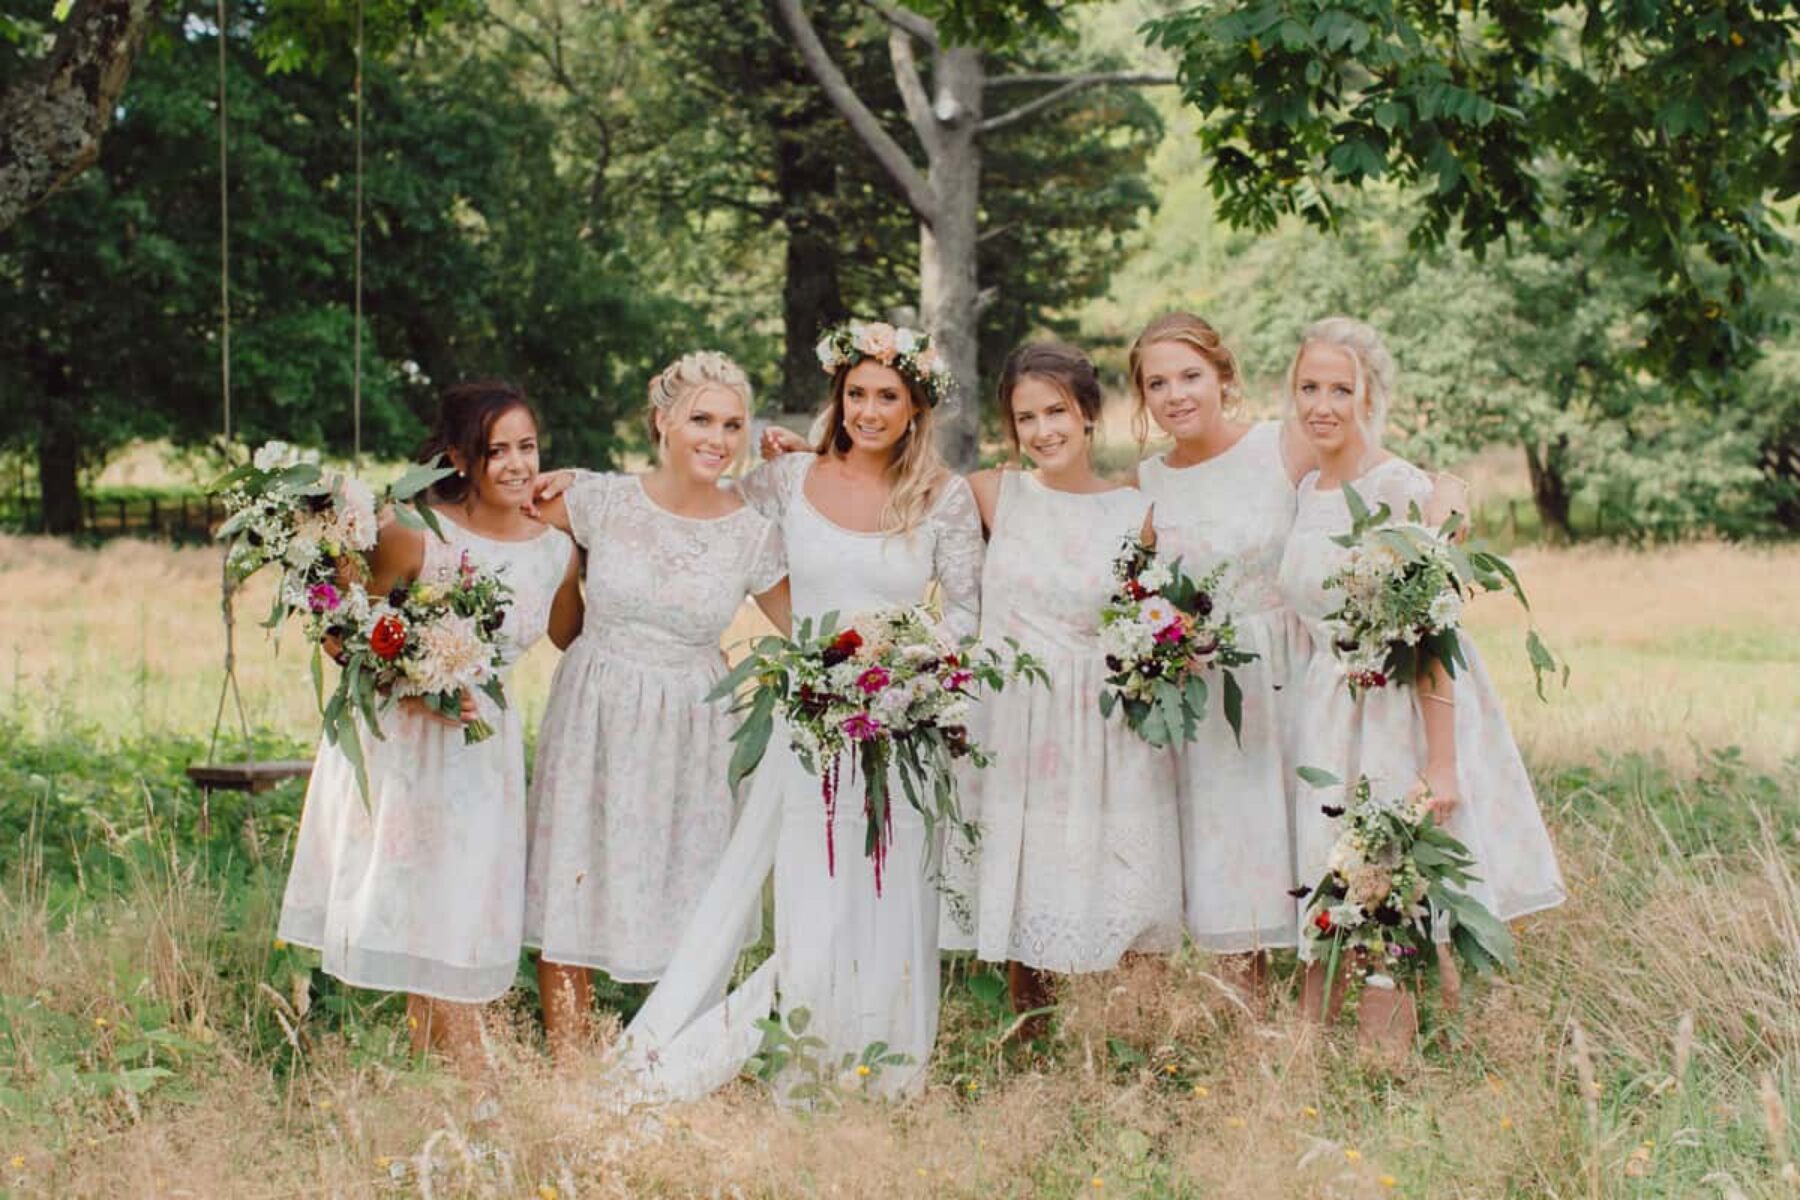 boho bride and bridesmaids in white